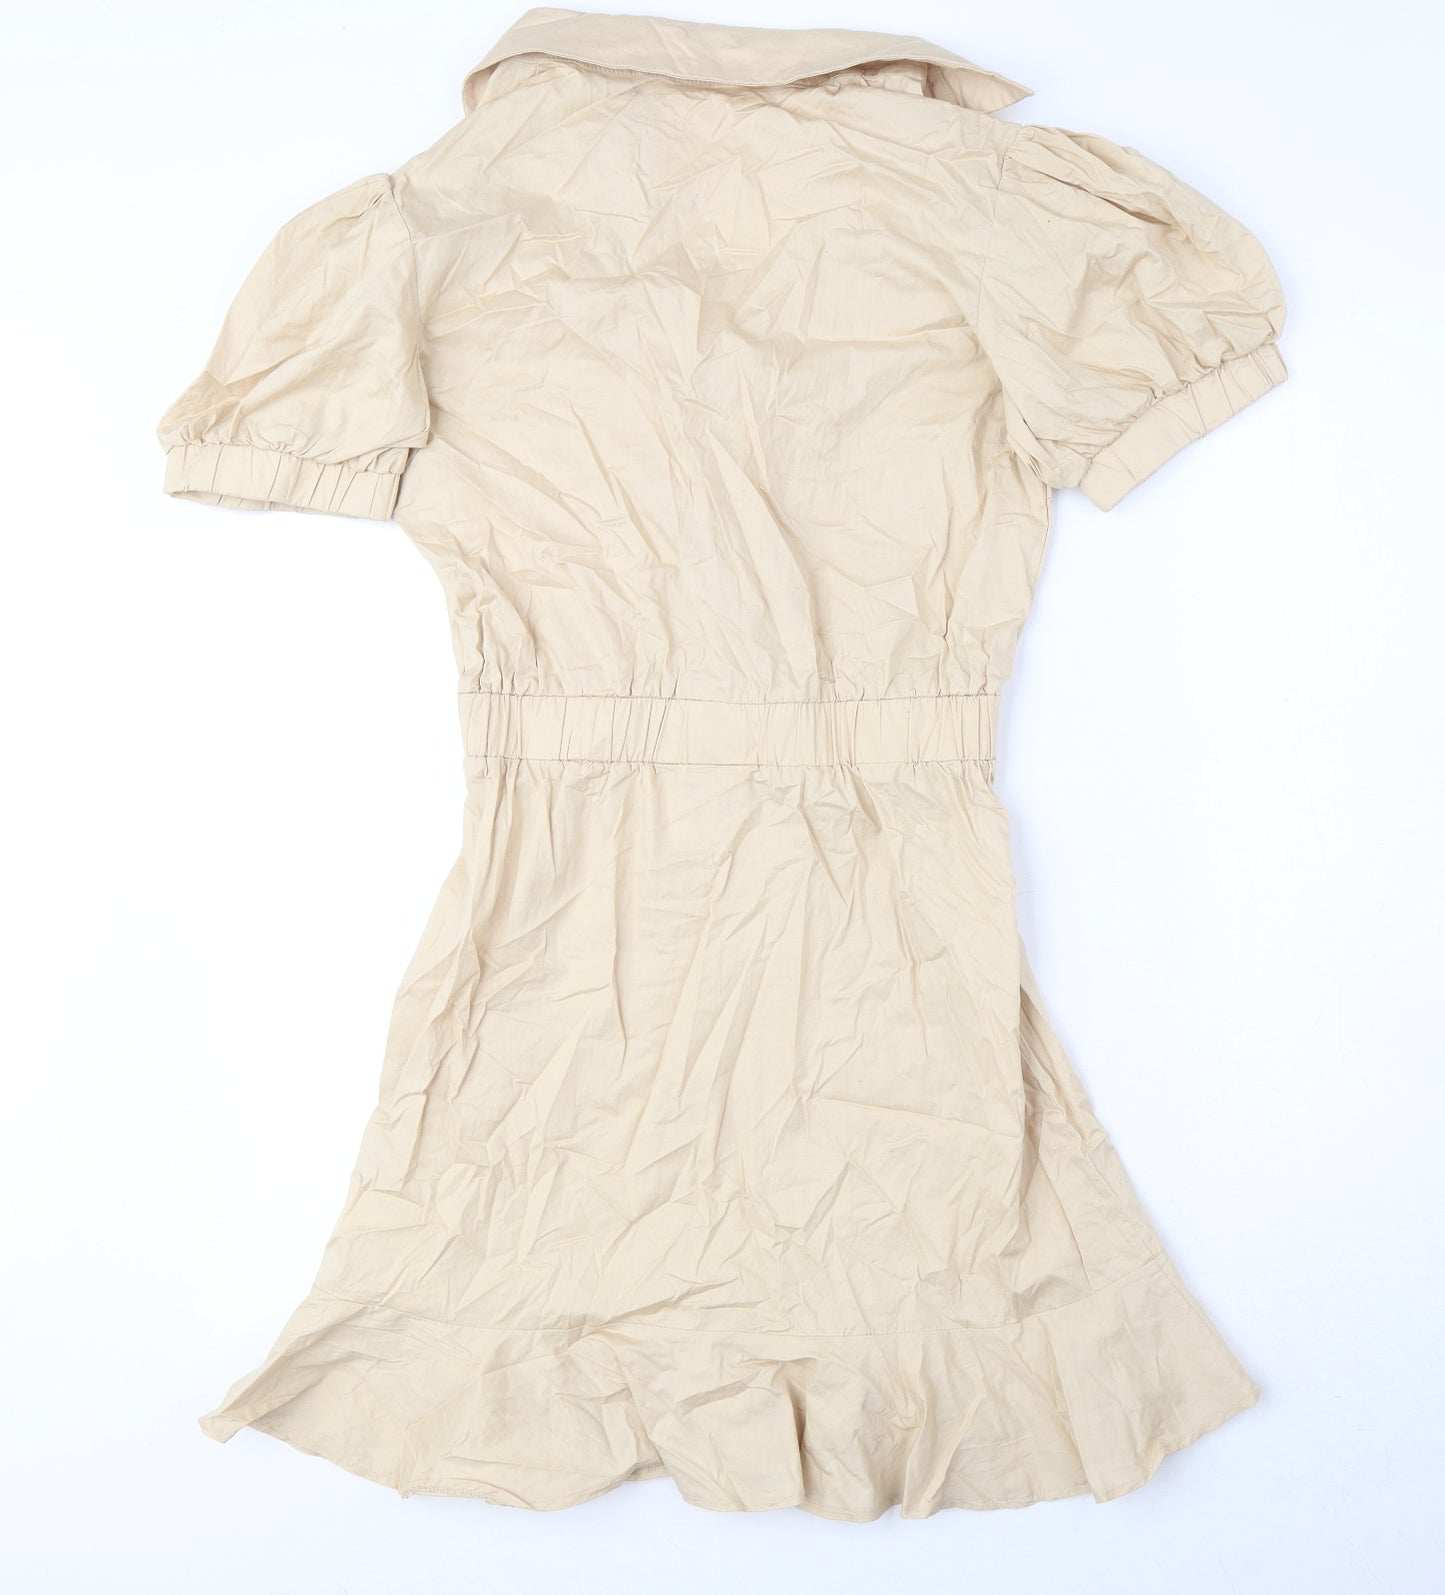 Missguided Womens Beige Cotton Shirt Dress Size 8 Collared Button